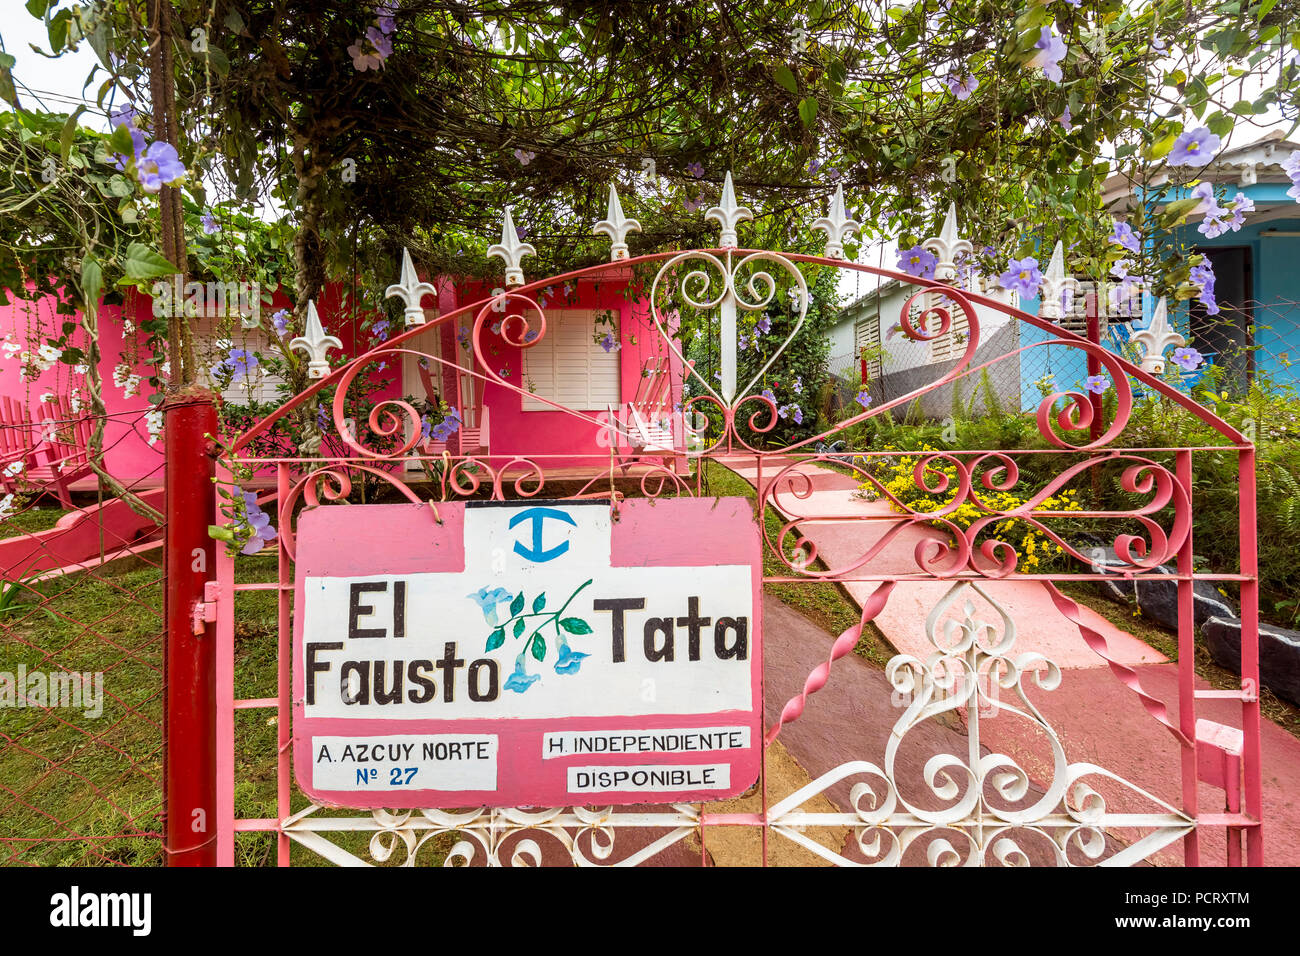 Pink house with stairs, casa particular, private habitation in Cuba, El Fausto Tata, Viñales, Cuba, Pinar del Río, Cuba, travel, island, Greater Antilles, Stock Photo